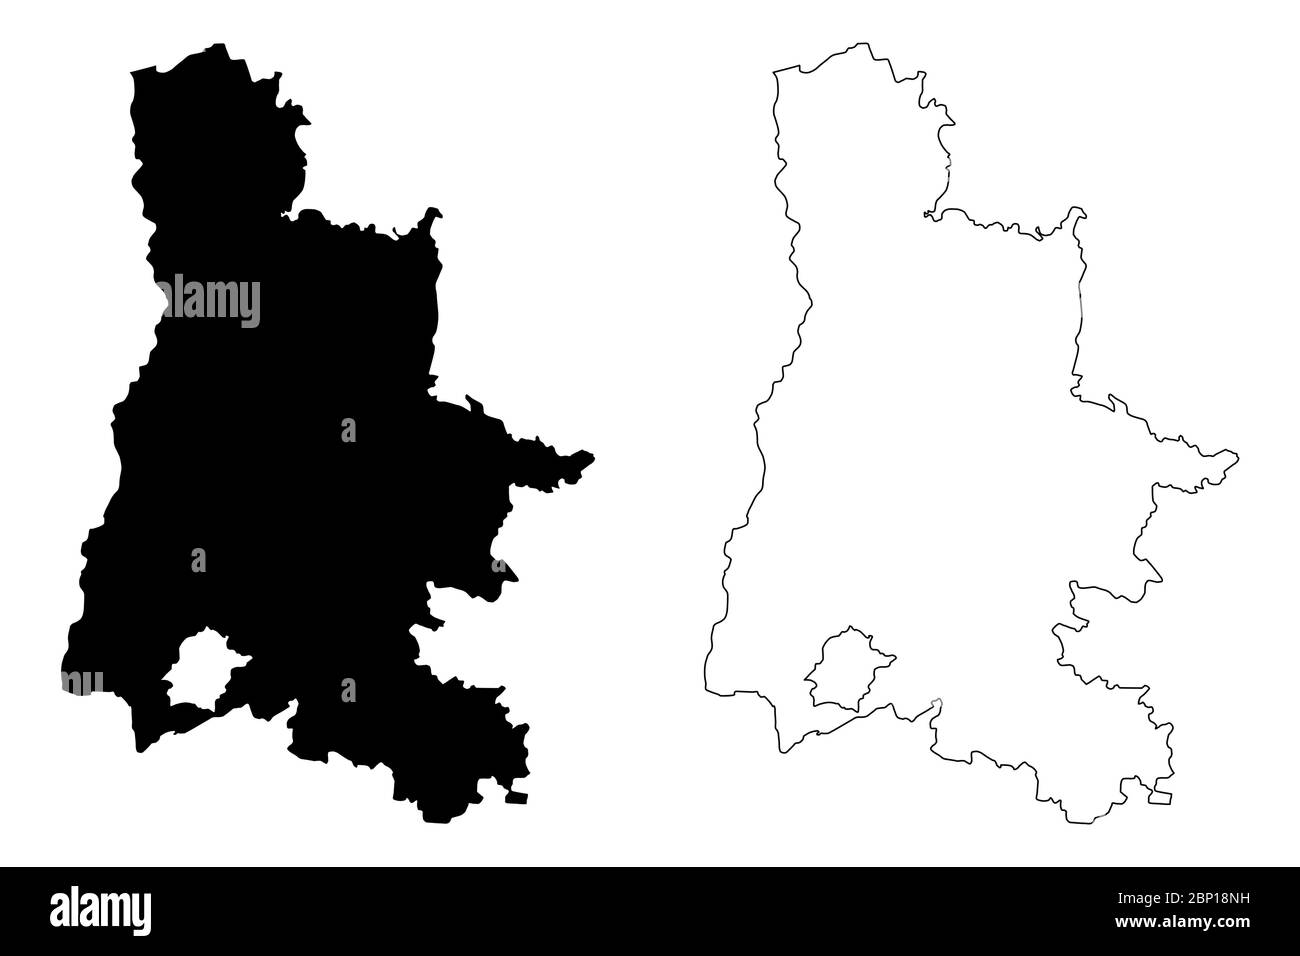 Drome Department (Frankreich, Französische Republik, Auvergne-Rhone-Alpes Region, ARA) Karte Vektorgrafik, Skizze Droma Karte Stock Vektor